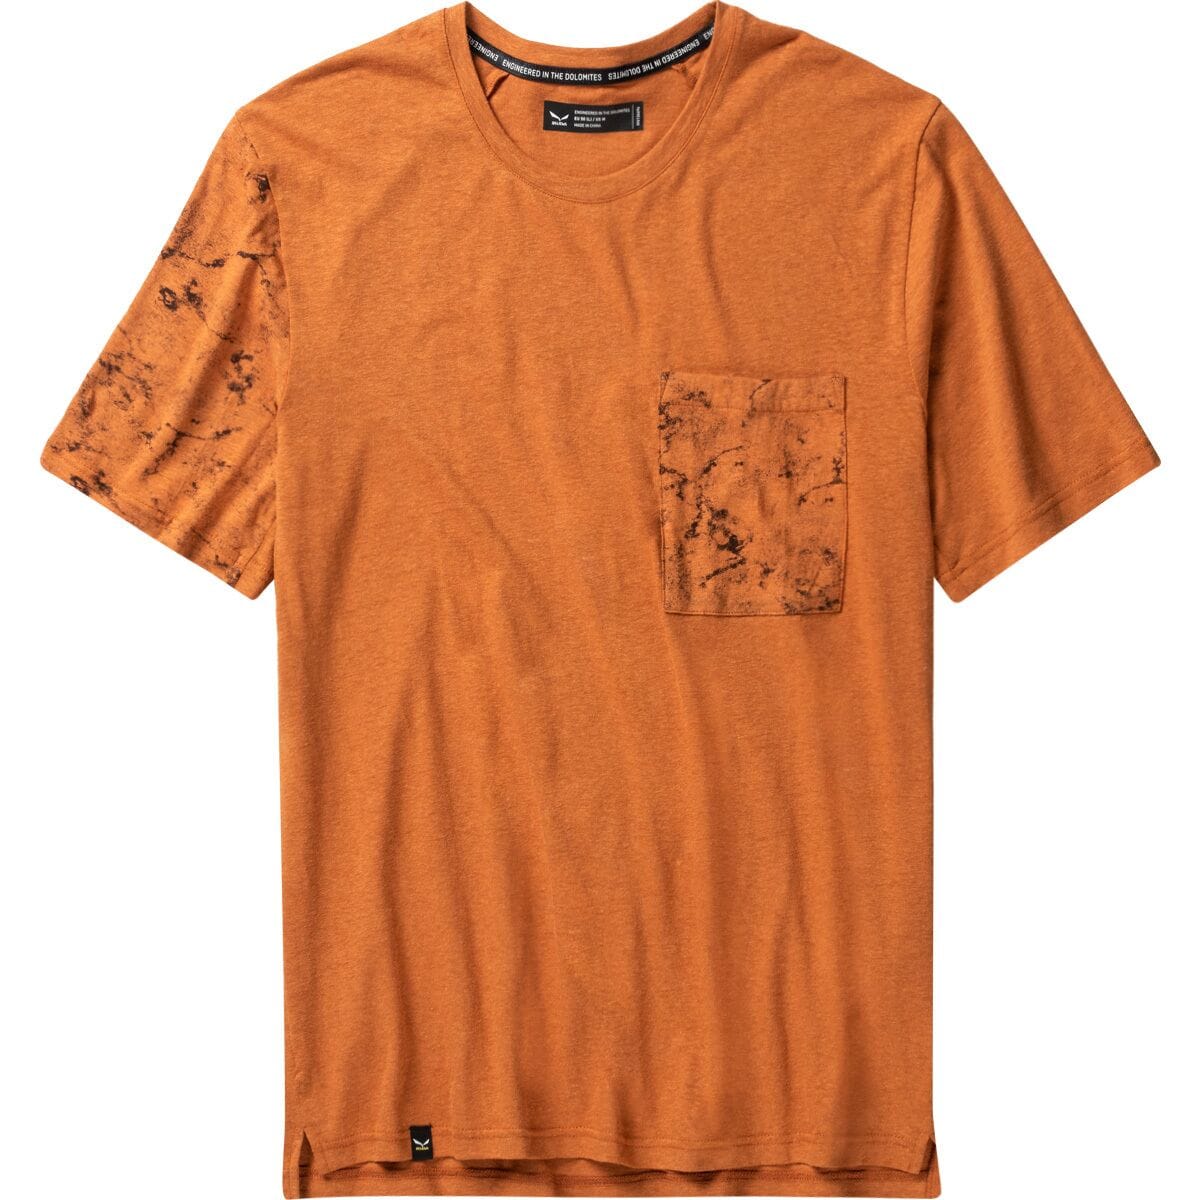 Lavaredo Hemp Pocket T-Shirt - Men